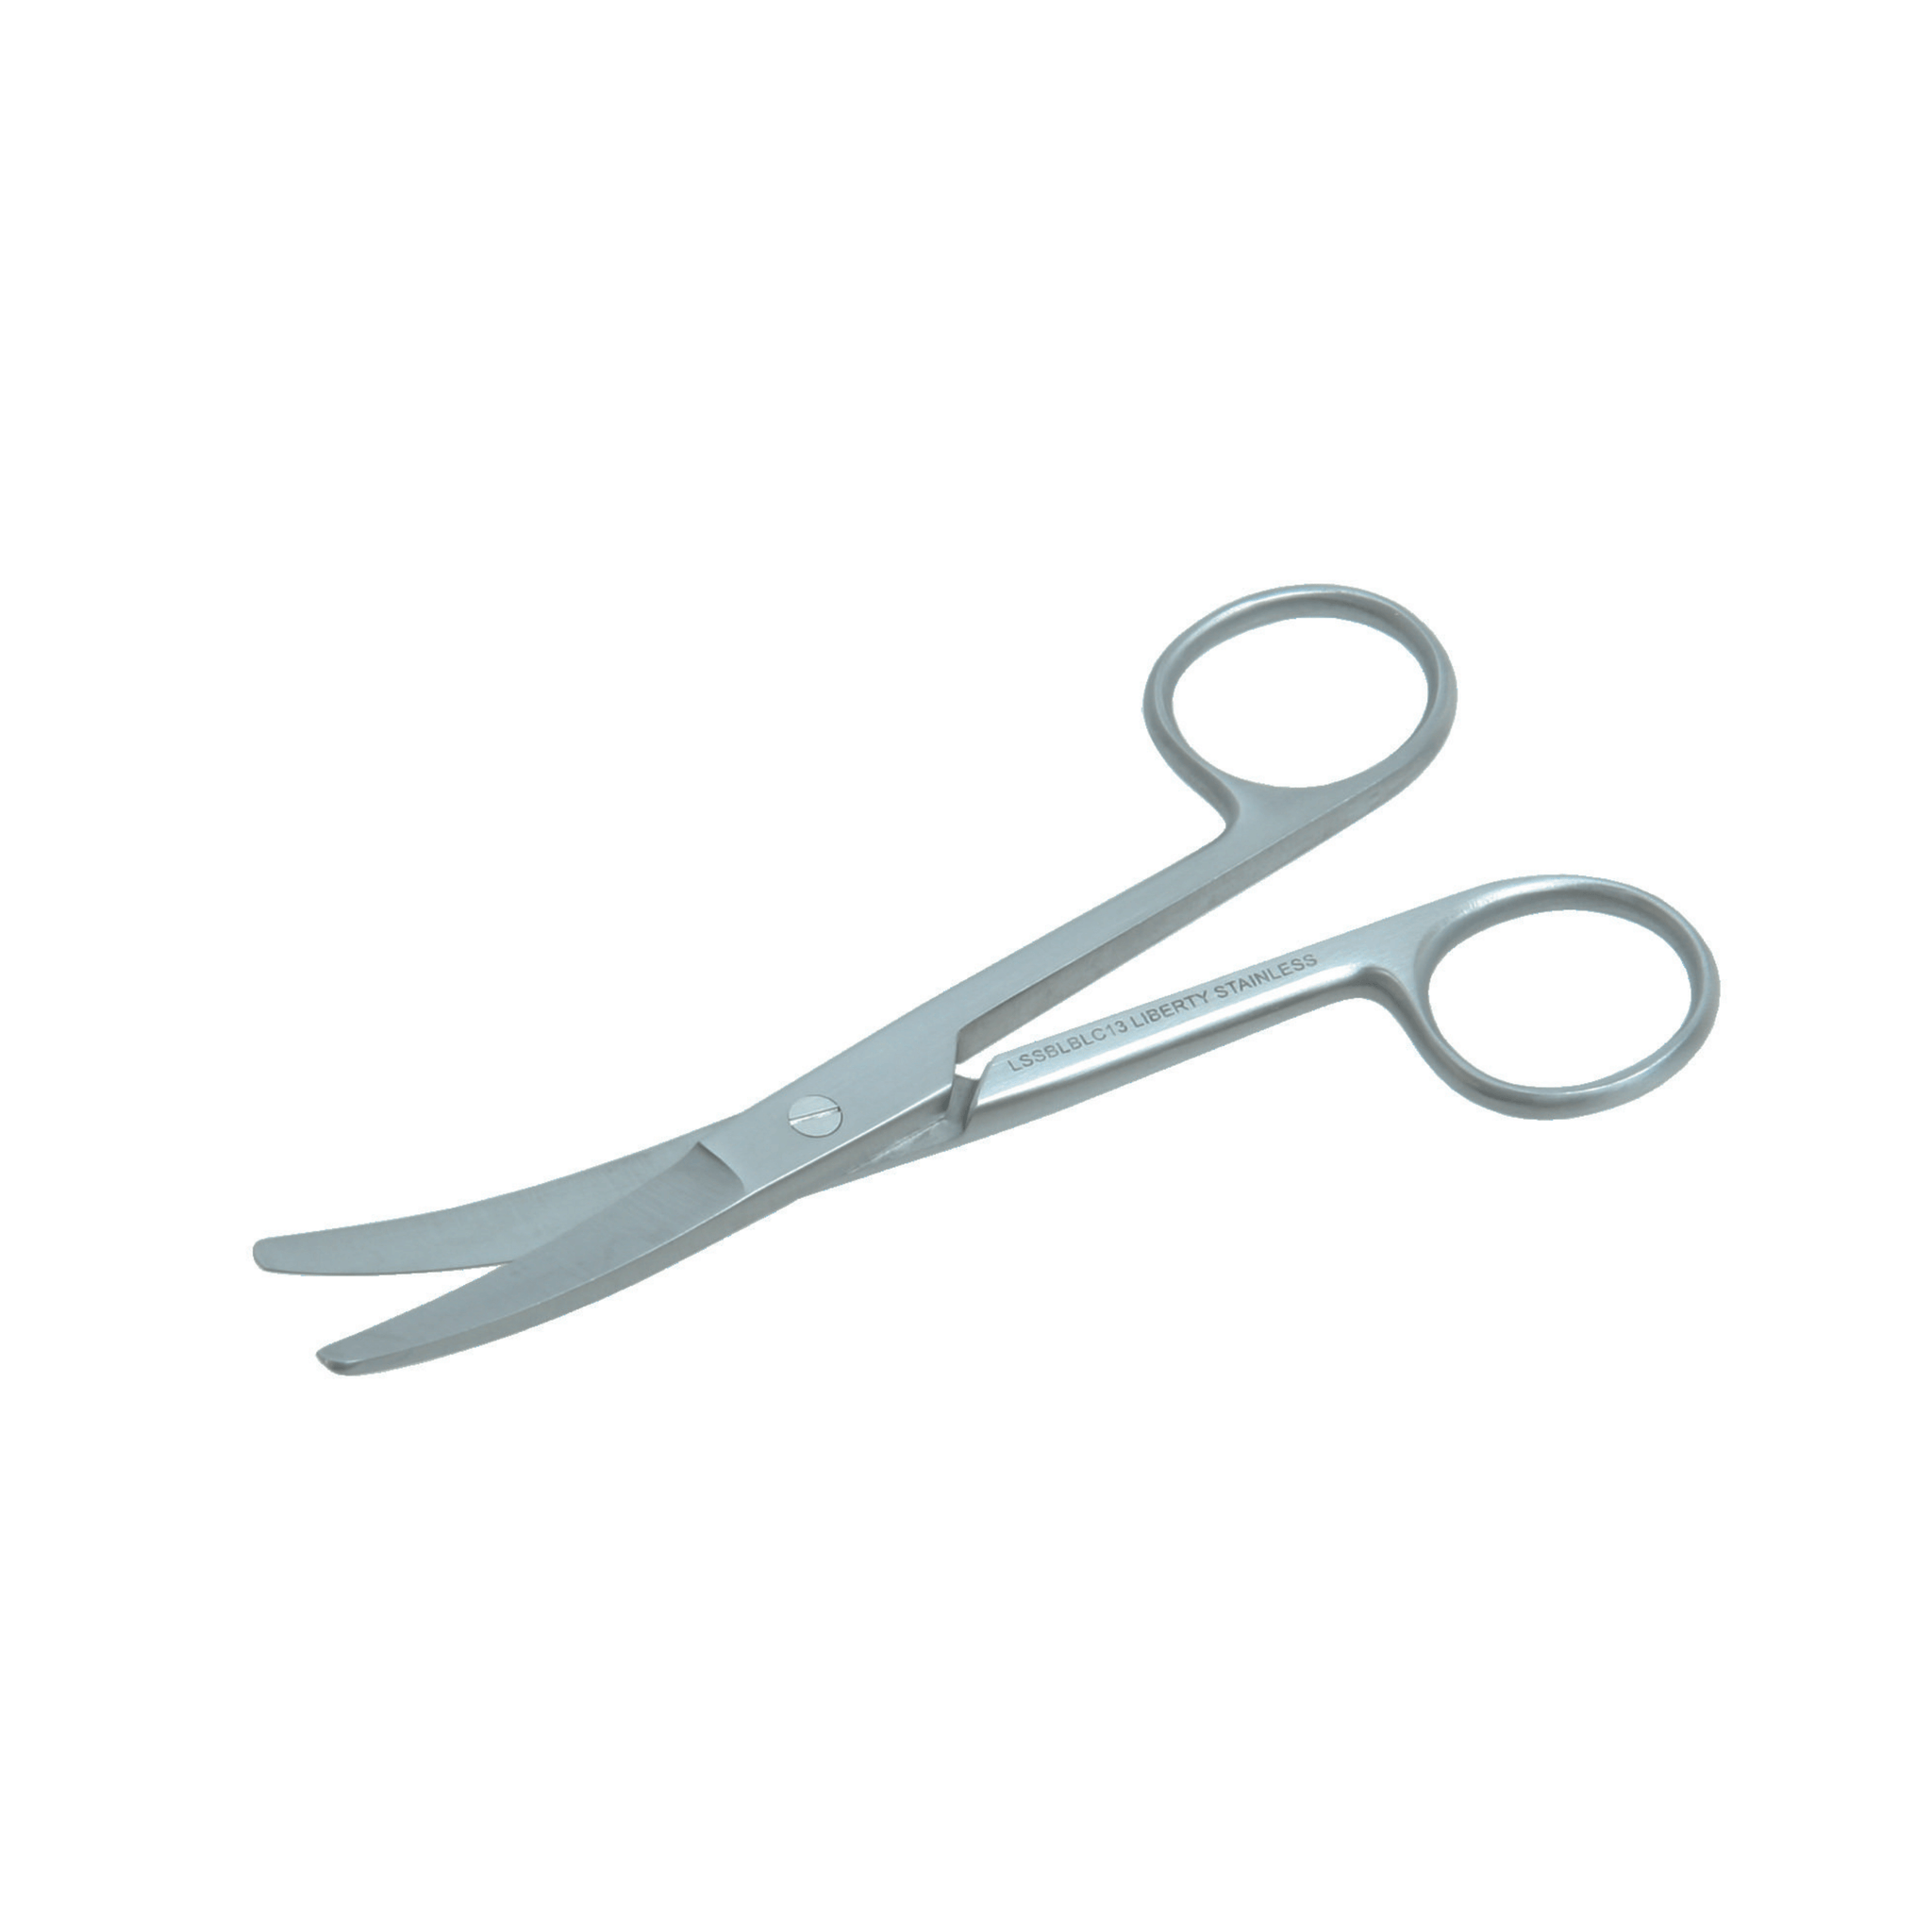 Surgical BL/BL Curved Scissors- 13 cm